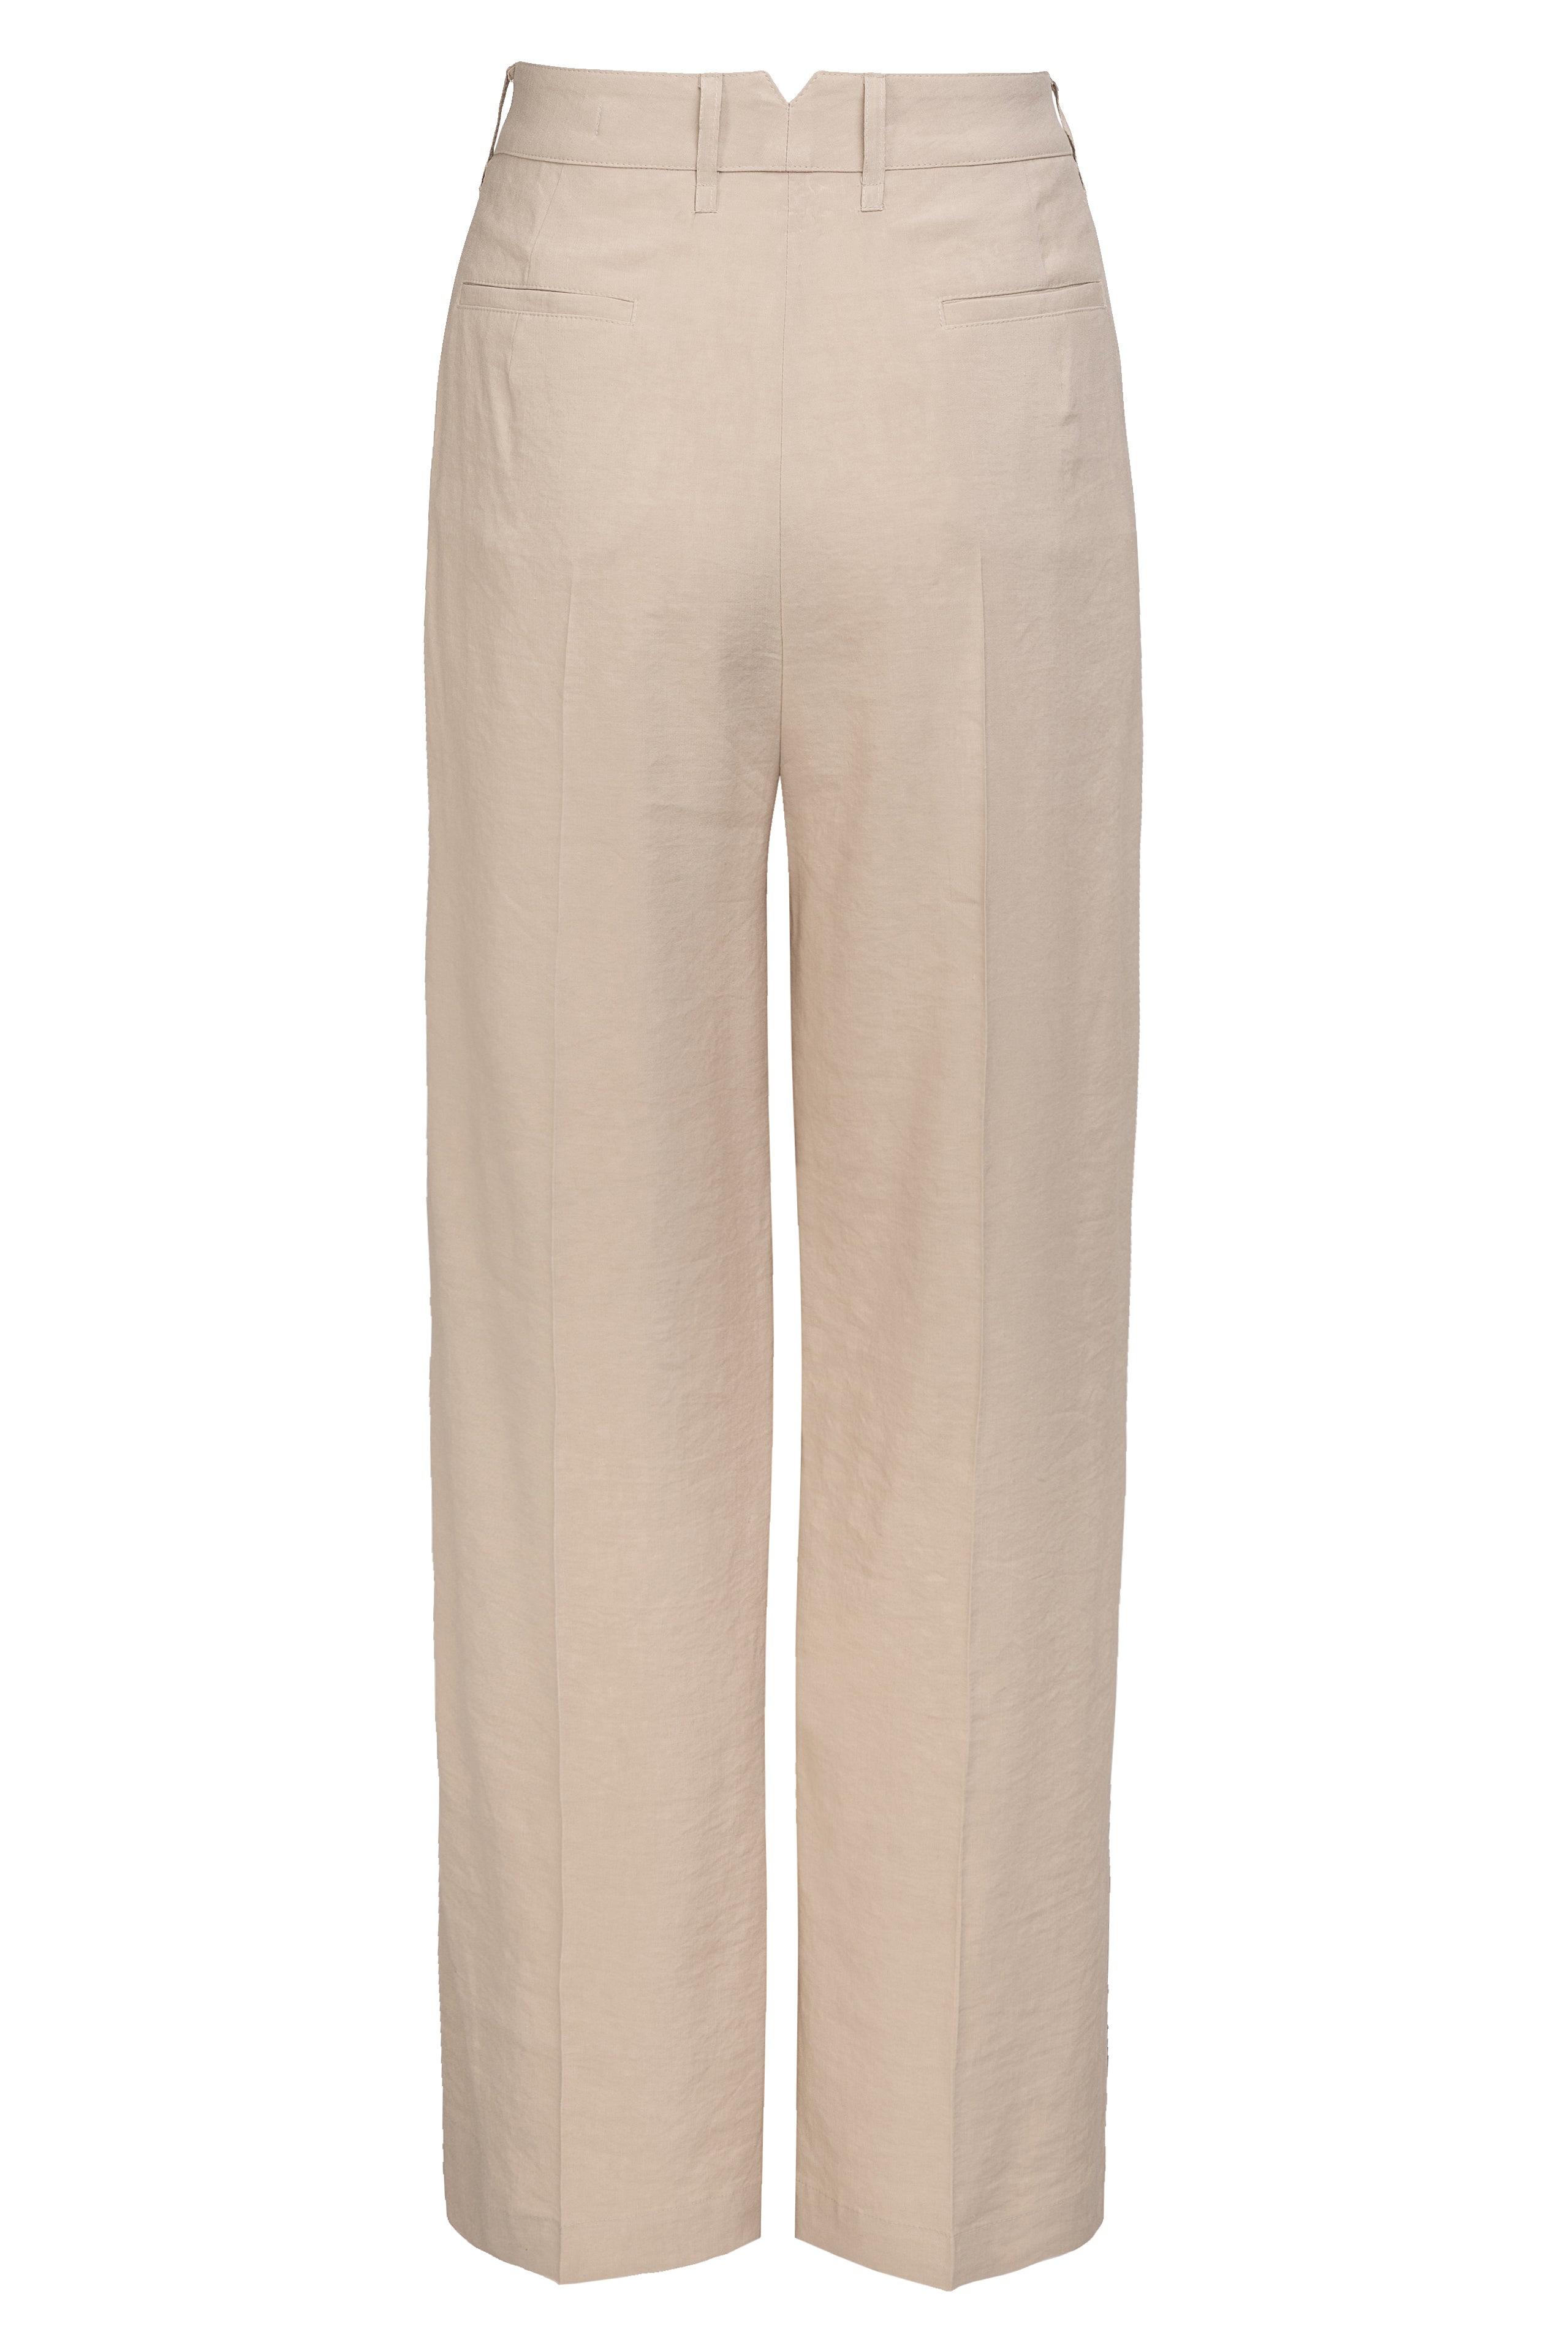 Linen pants with pleats